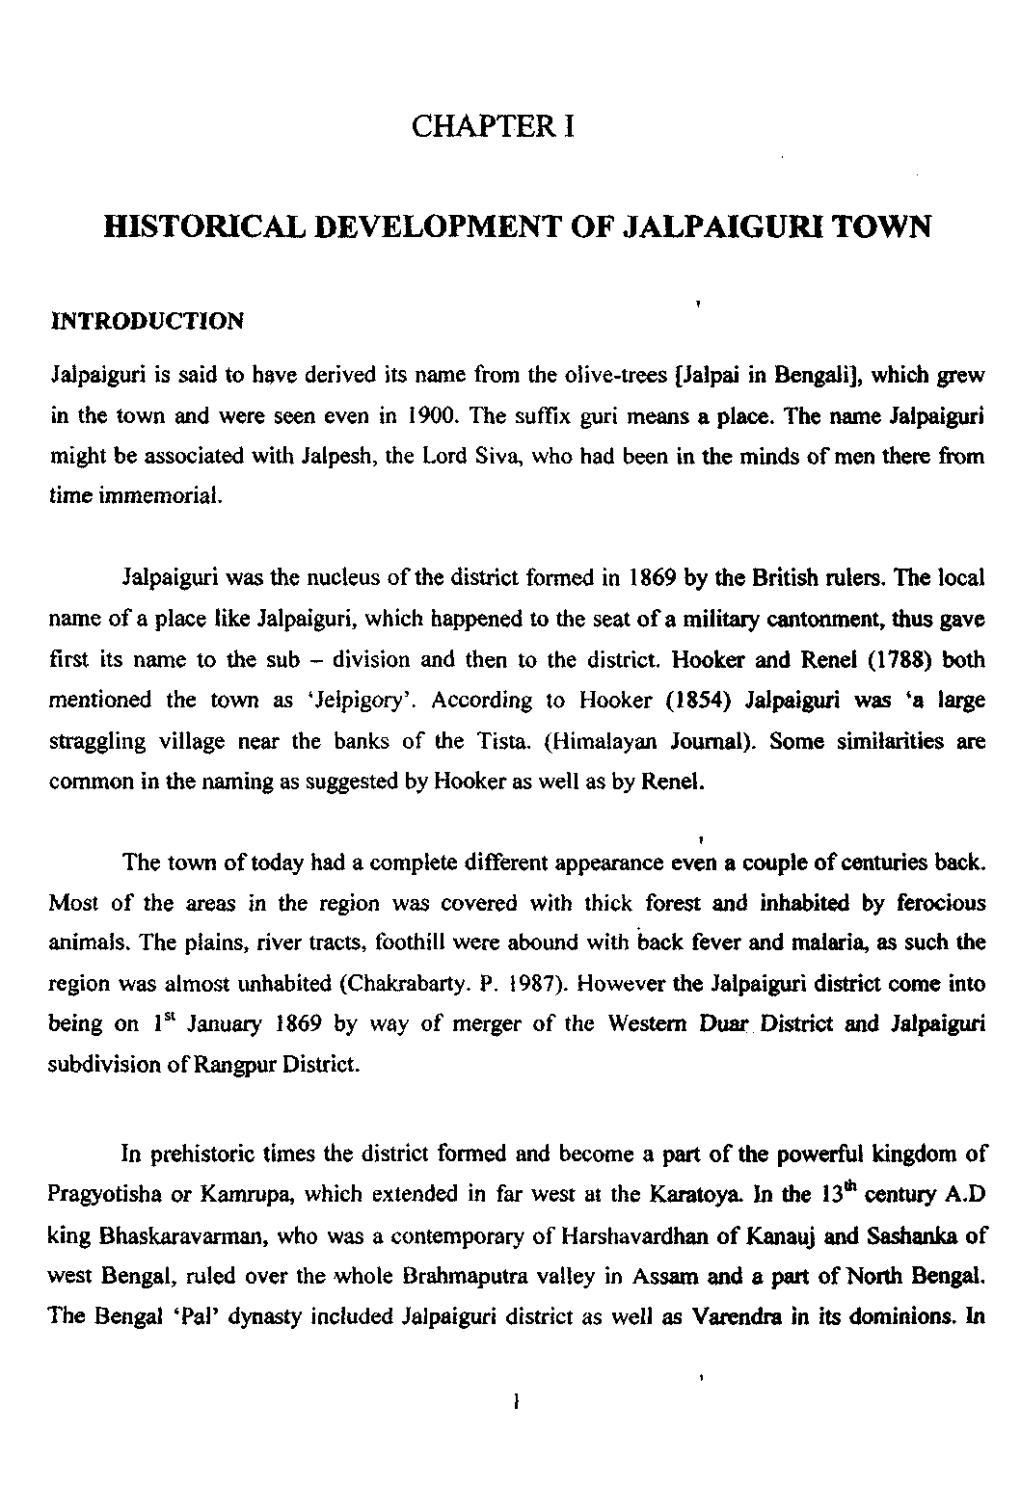 Chapter I Historical Development of Jalpaiguri Town